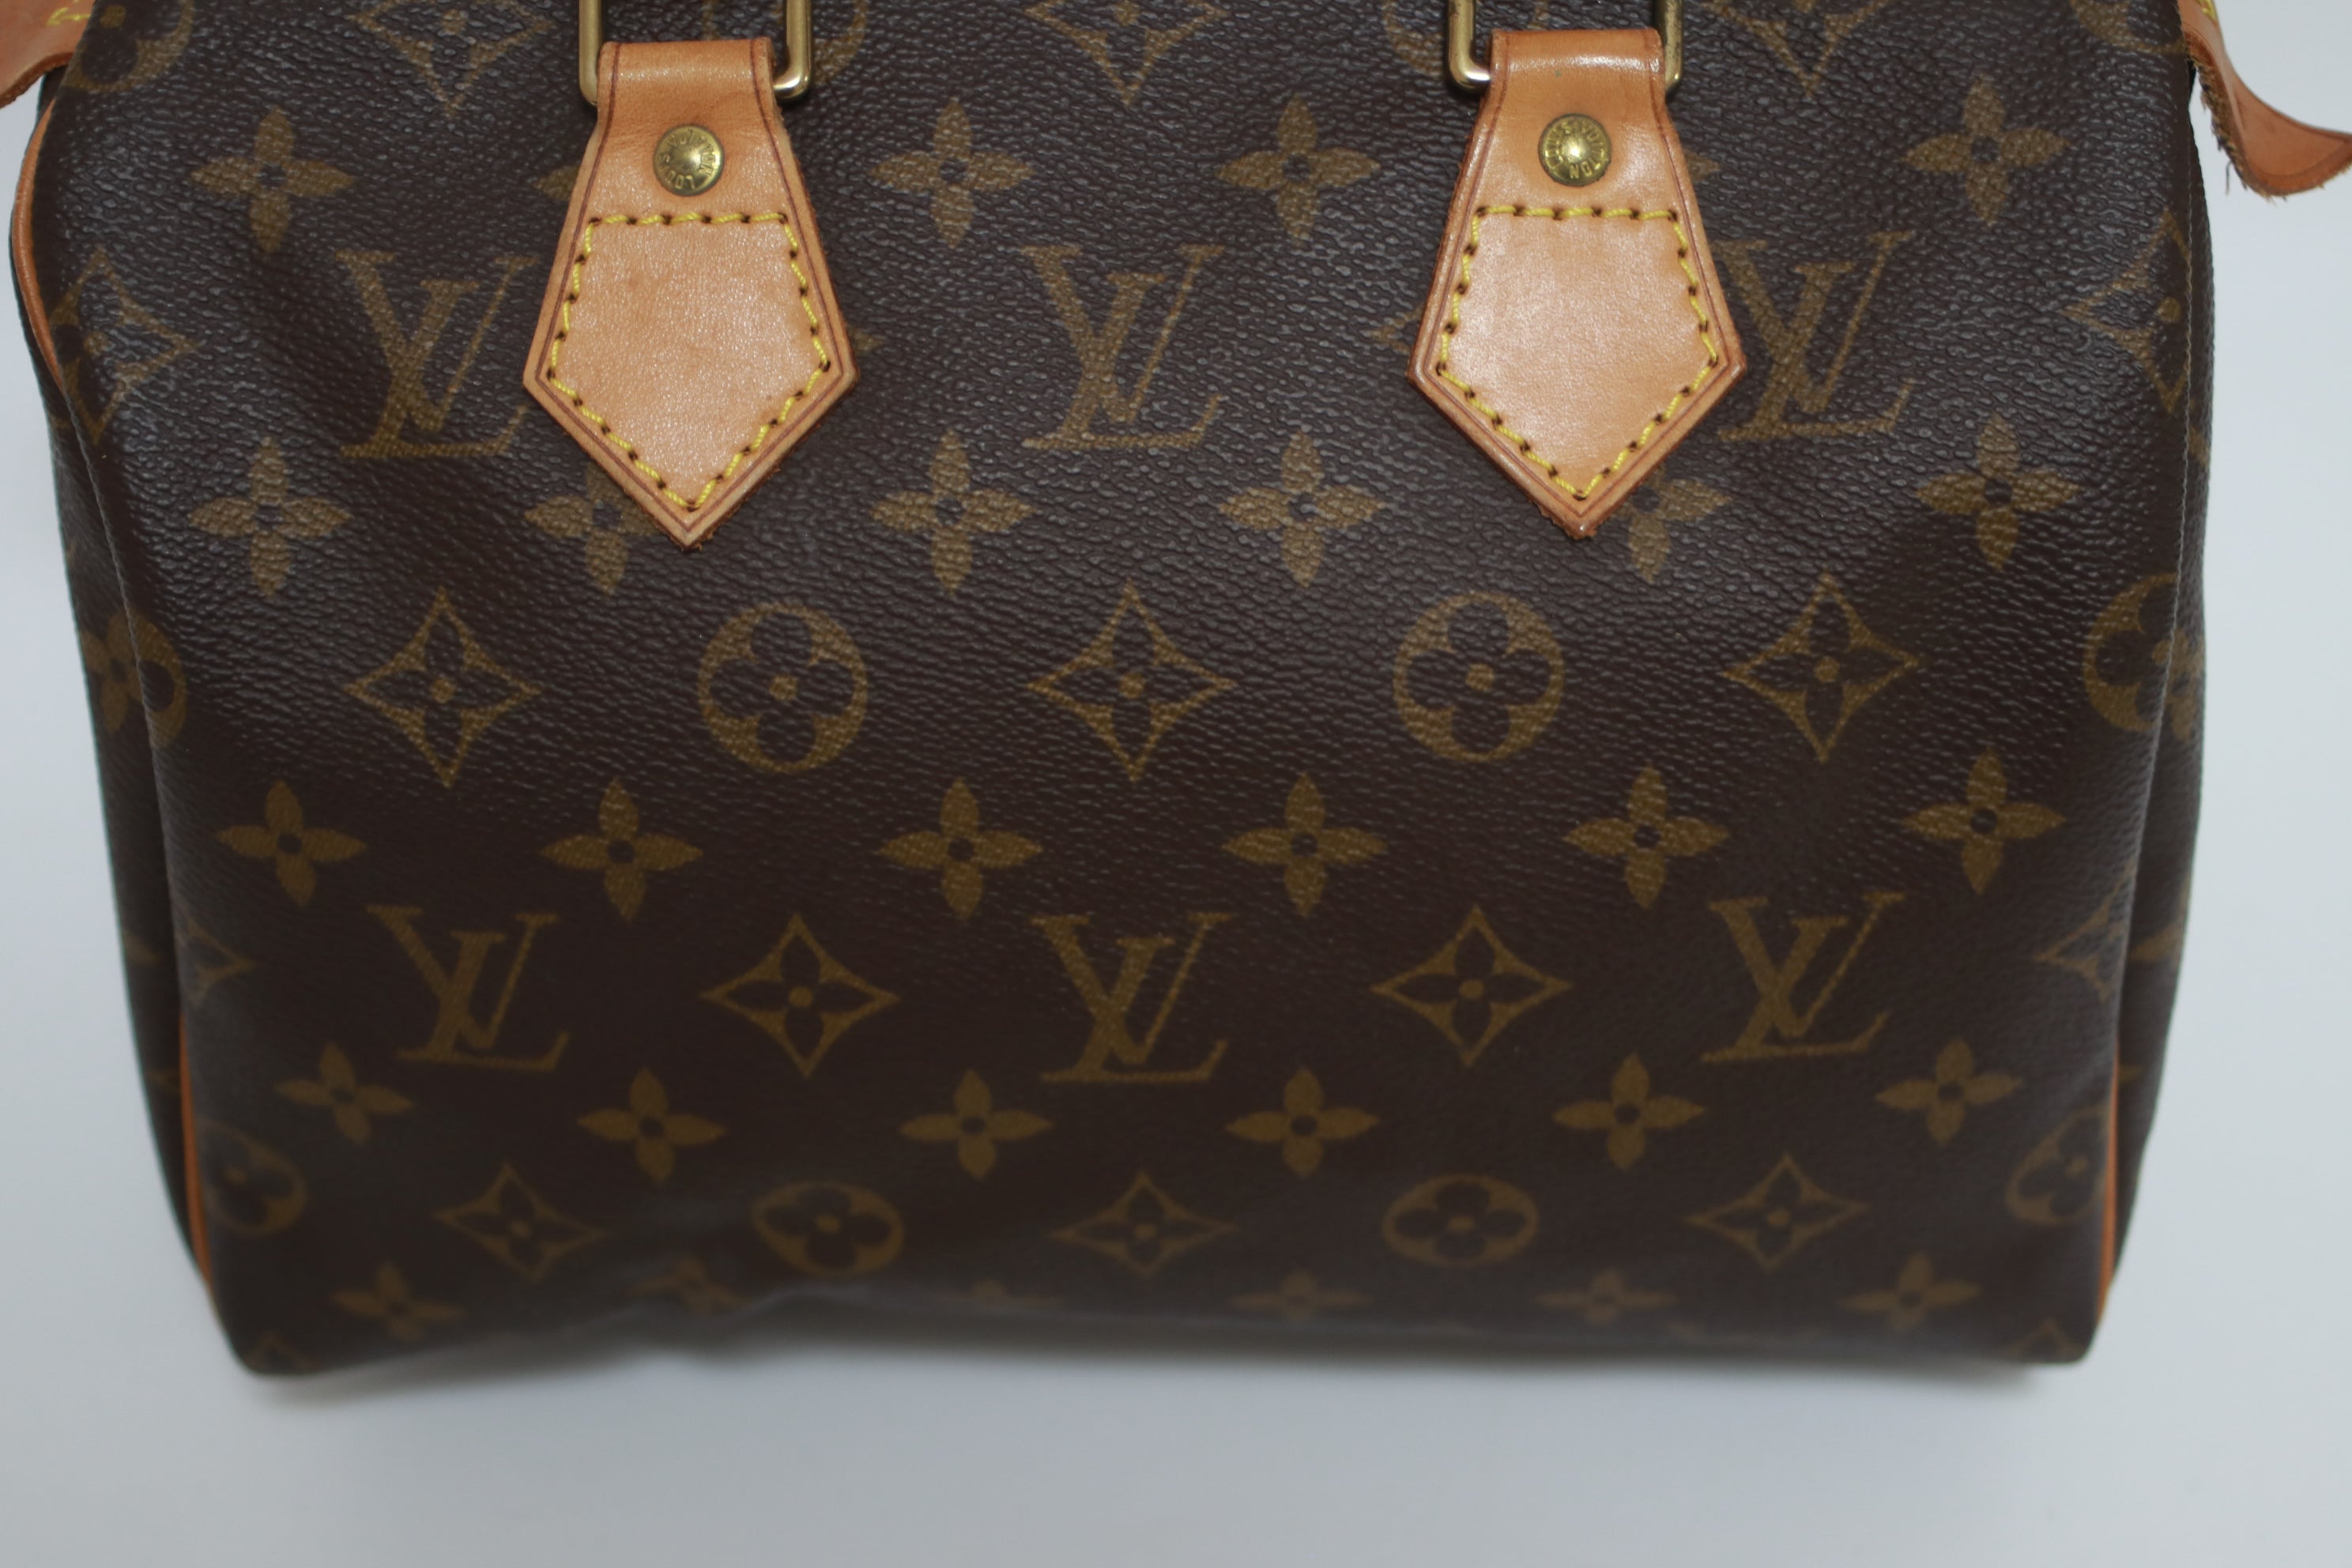 Louis Vuitton Speedy 25 Handbag Used (8058)